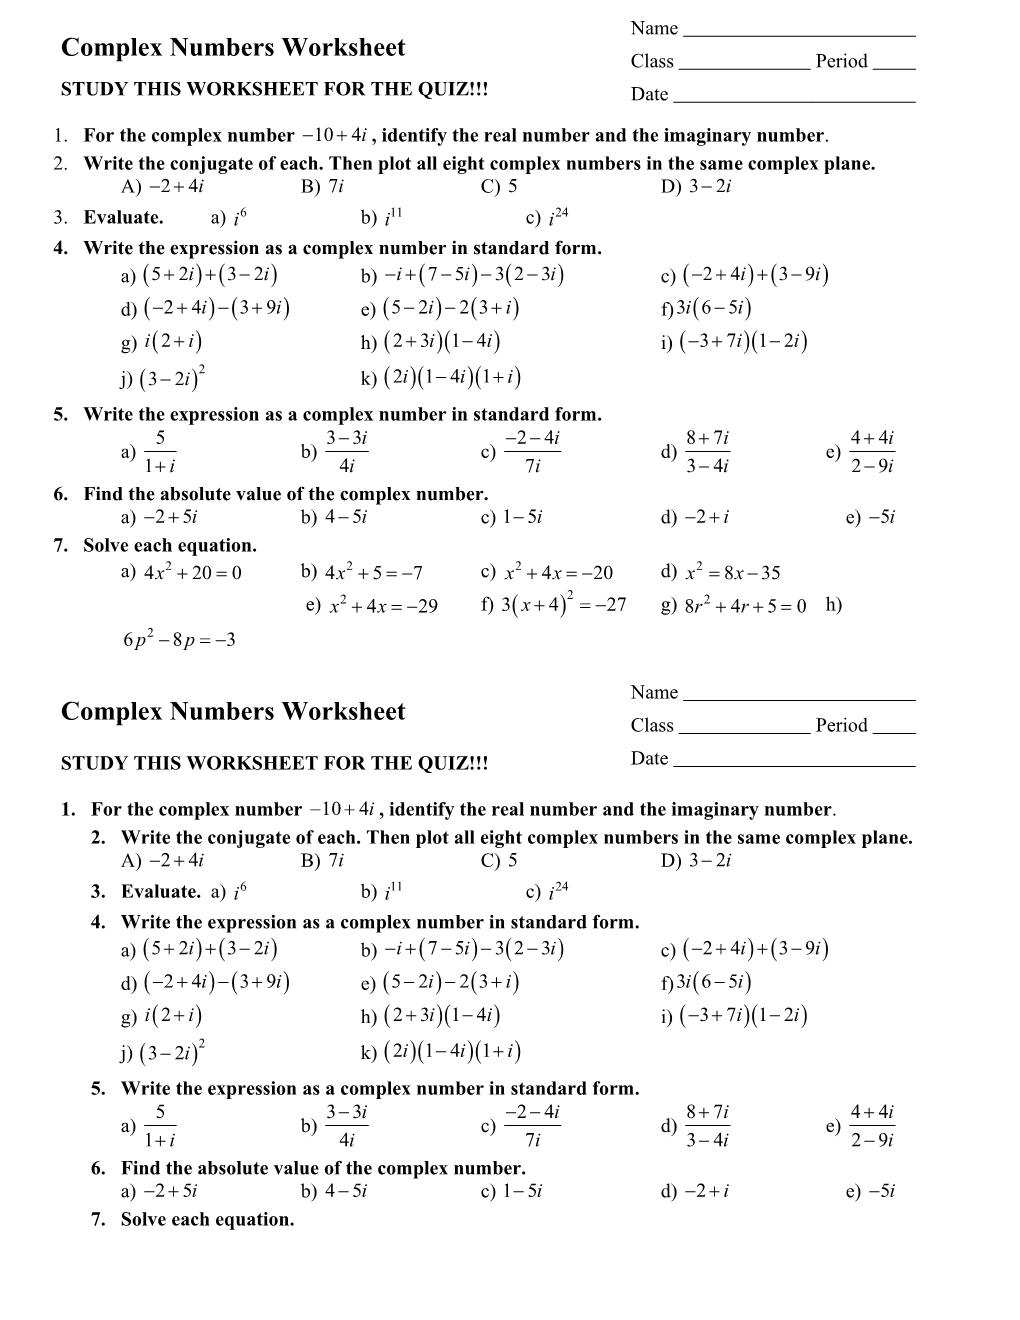 Complex Numbers Worksheet s5